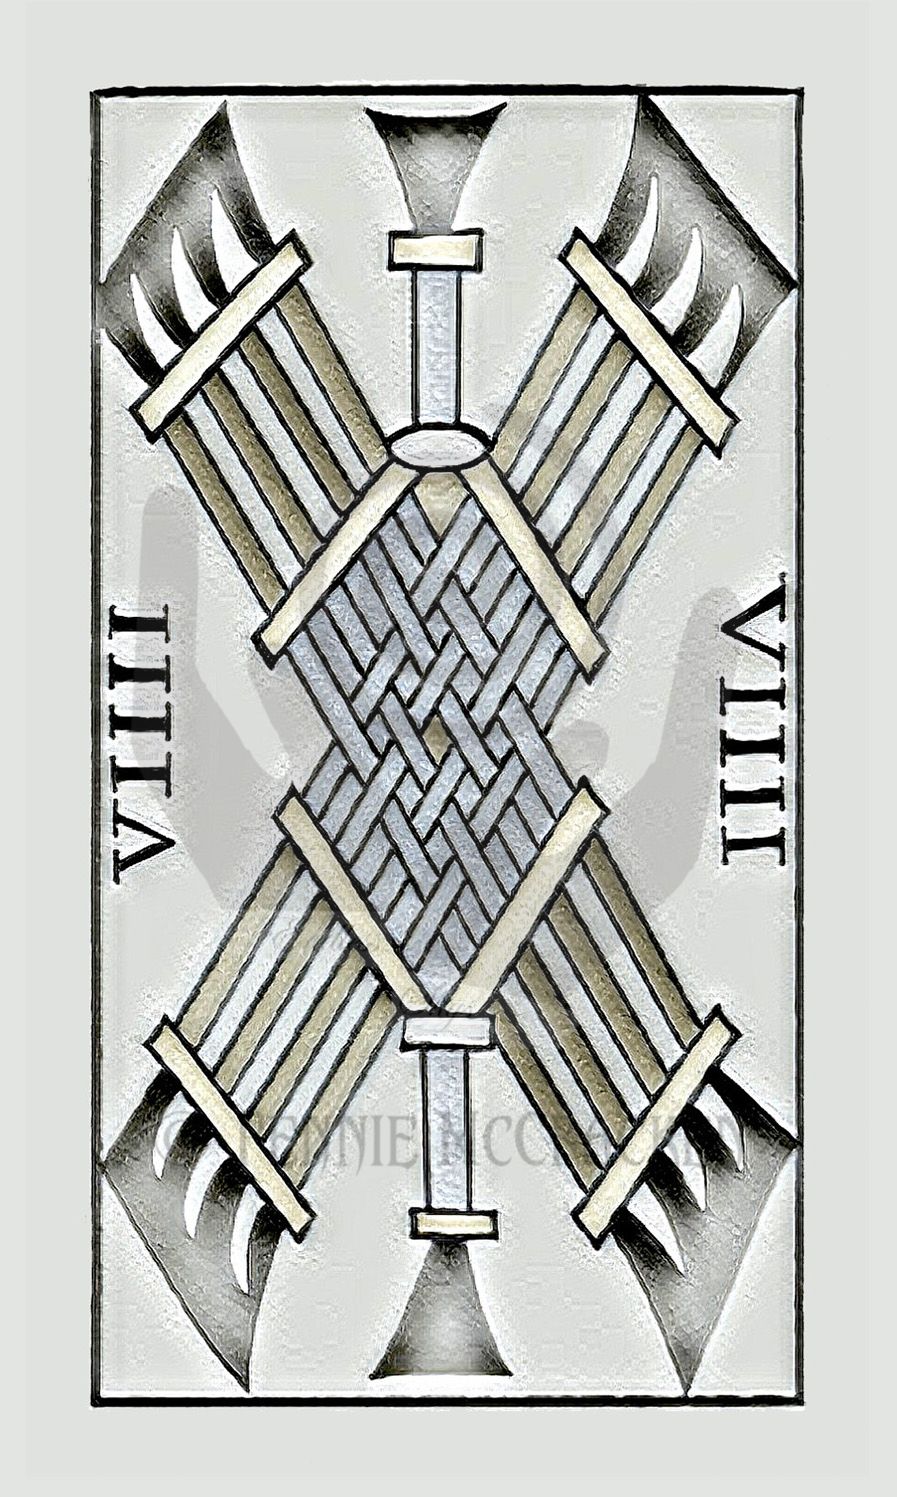 Original Tarot Deck Designs by Pennie McCracken - EndlessSkys.ca